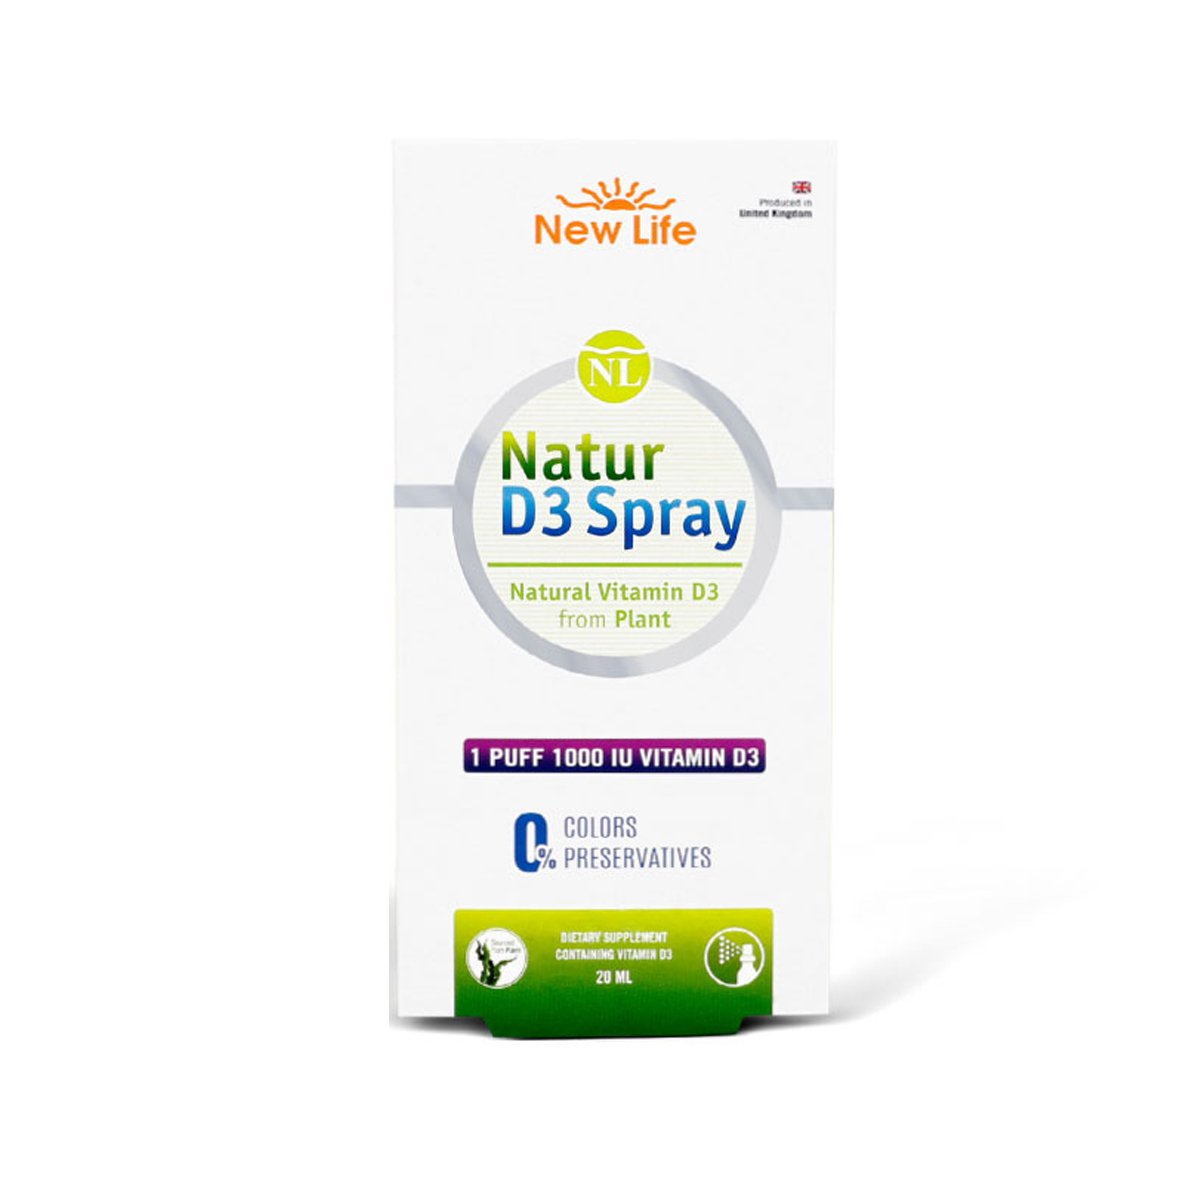 New Life Natur D3 Spray 20 ml 1 Puff 1000 IU